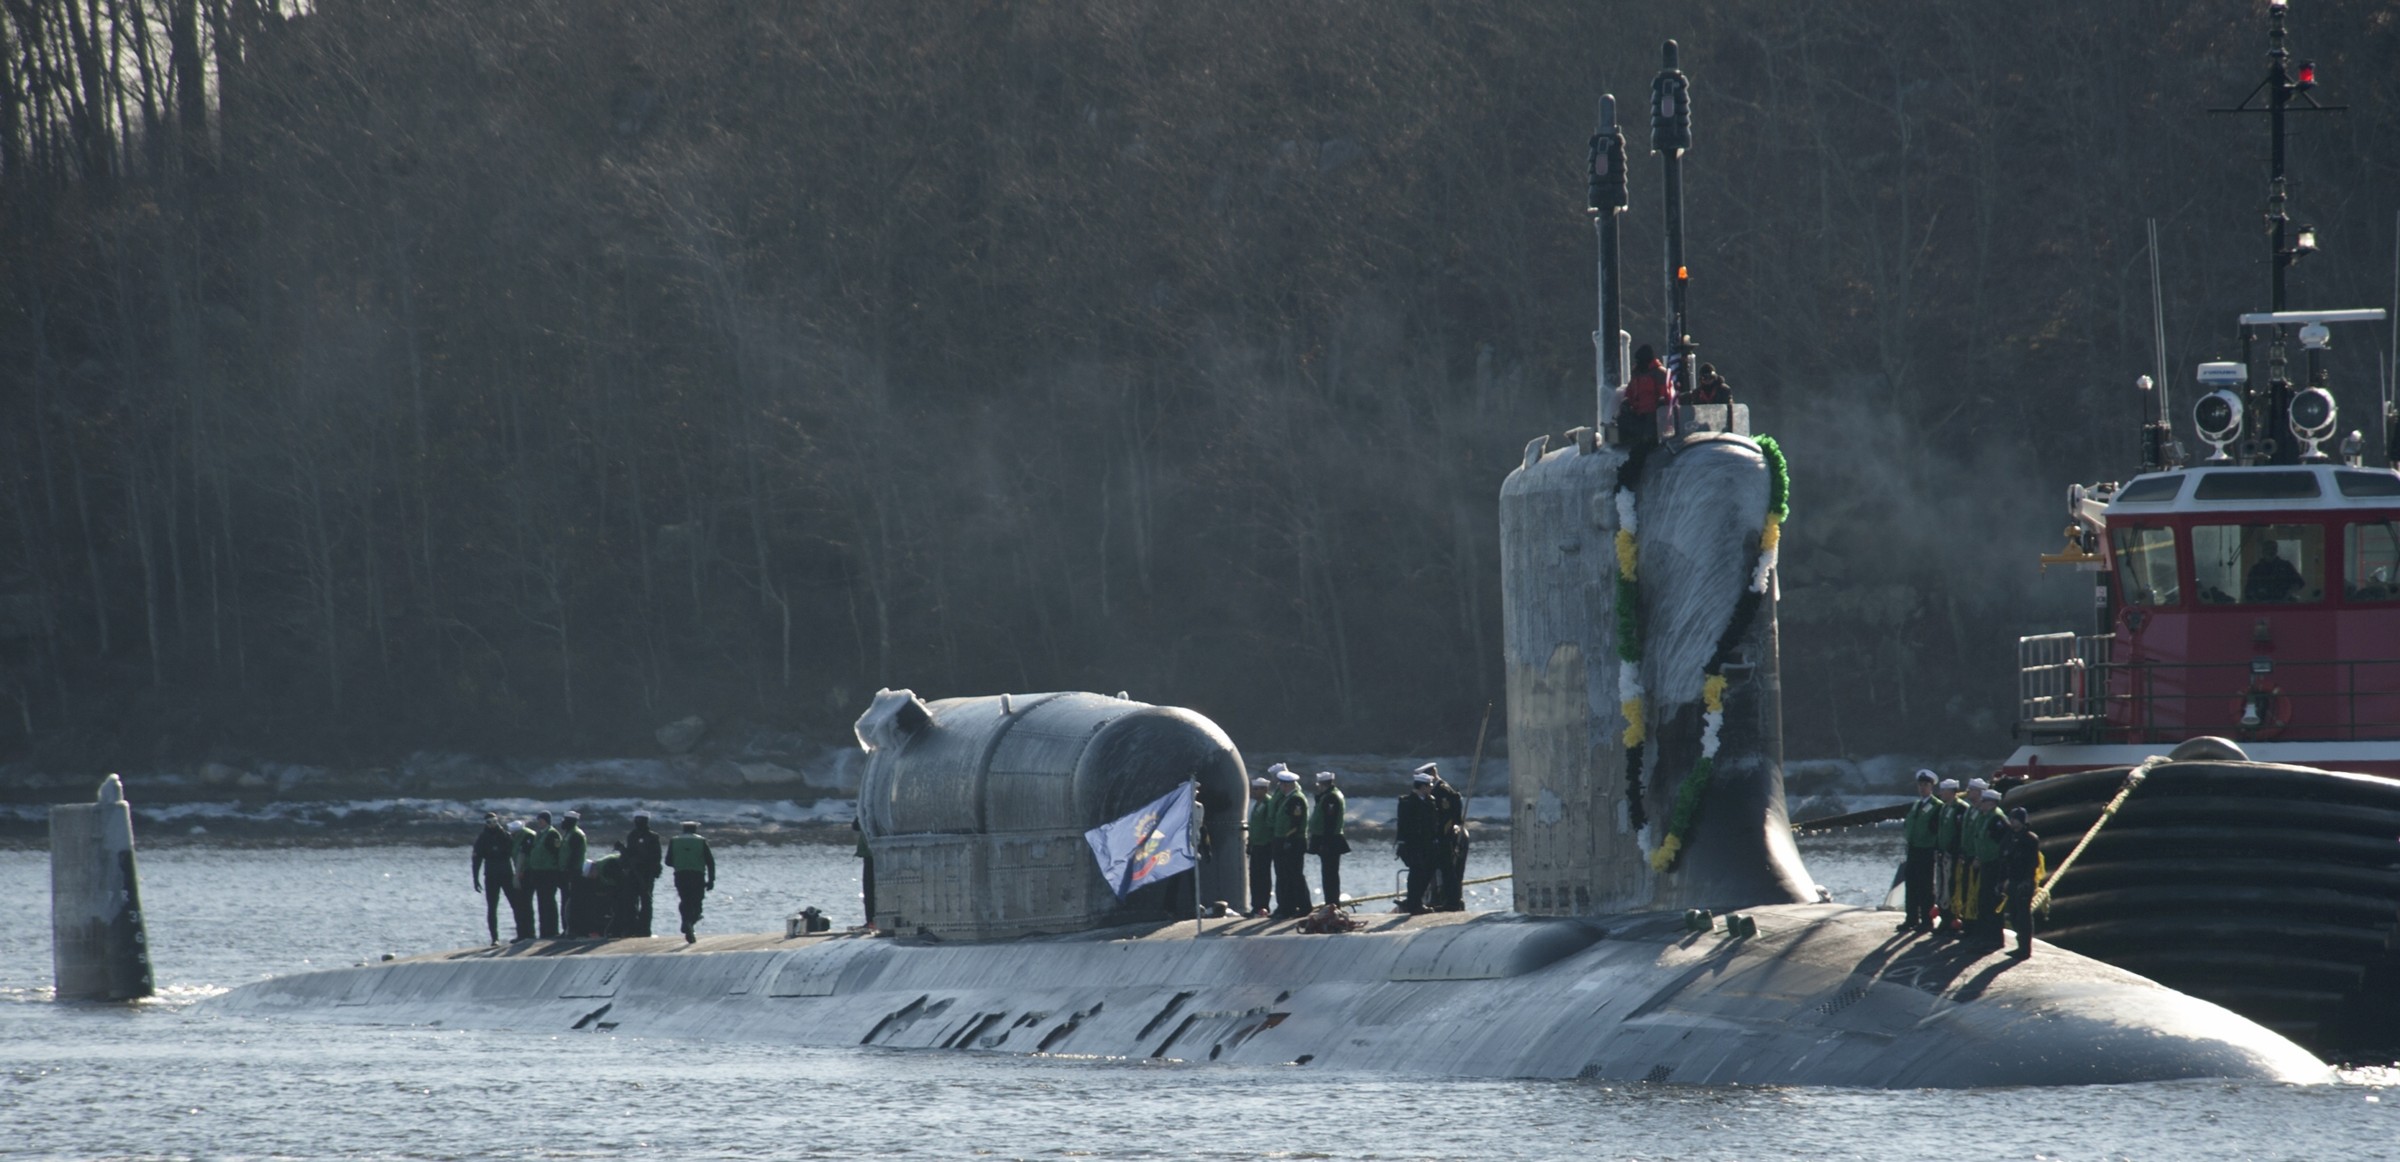 ssn-784 uss north dakota virginia class attack submarine us navy 29 new london groton